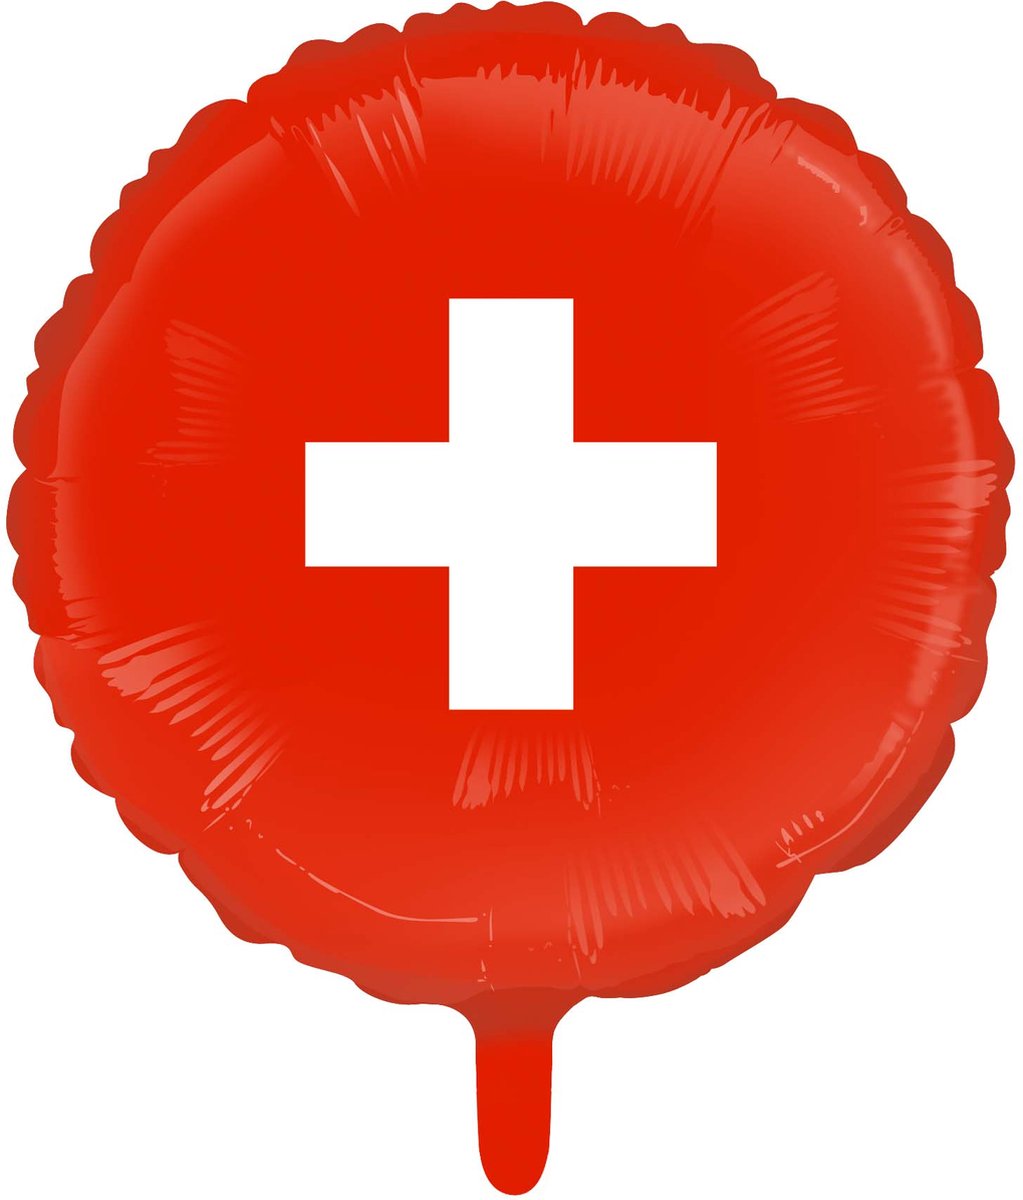 Folieballon 45cm vlag Zwitserland